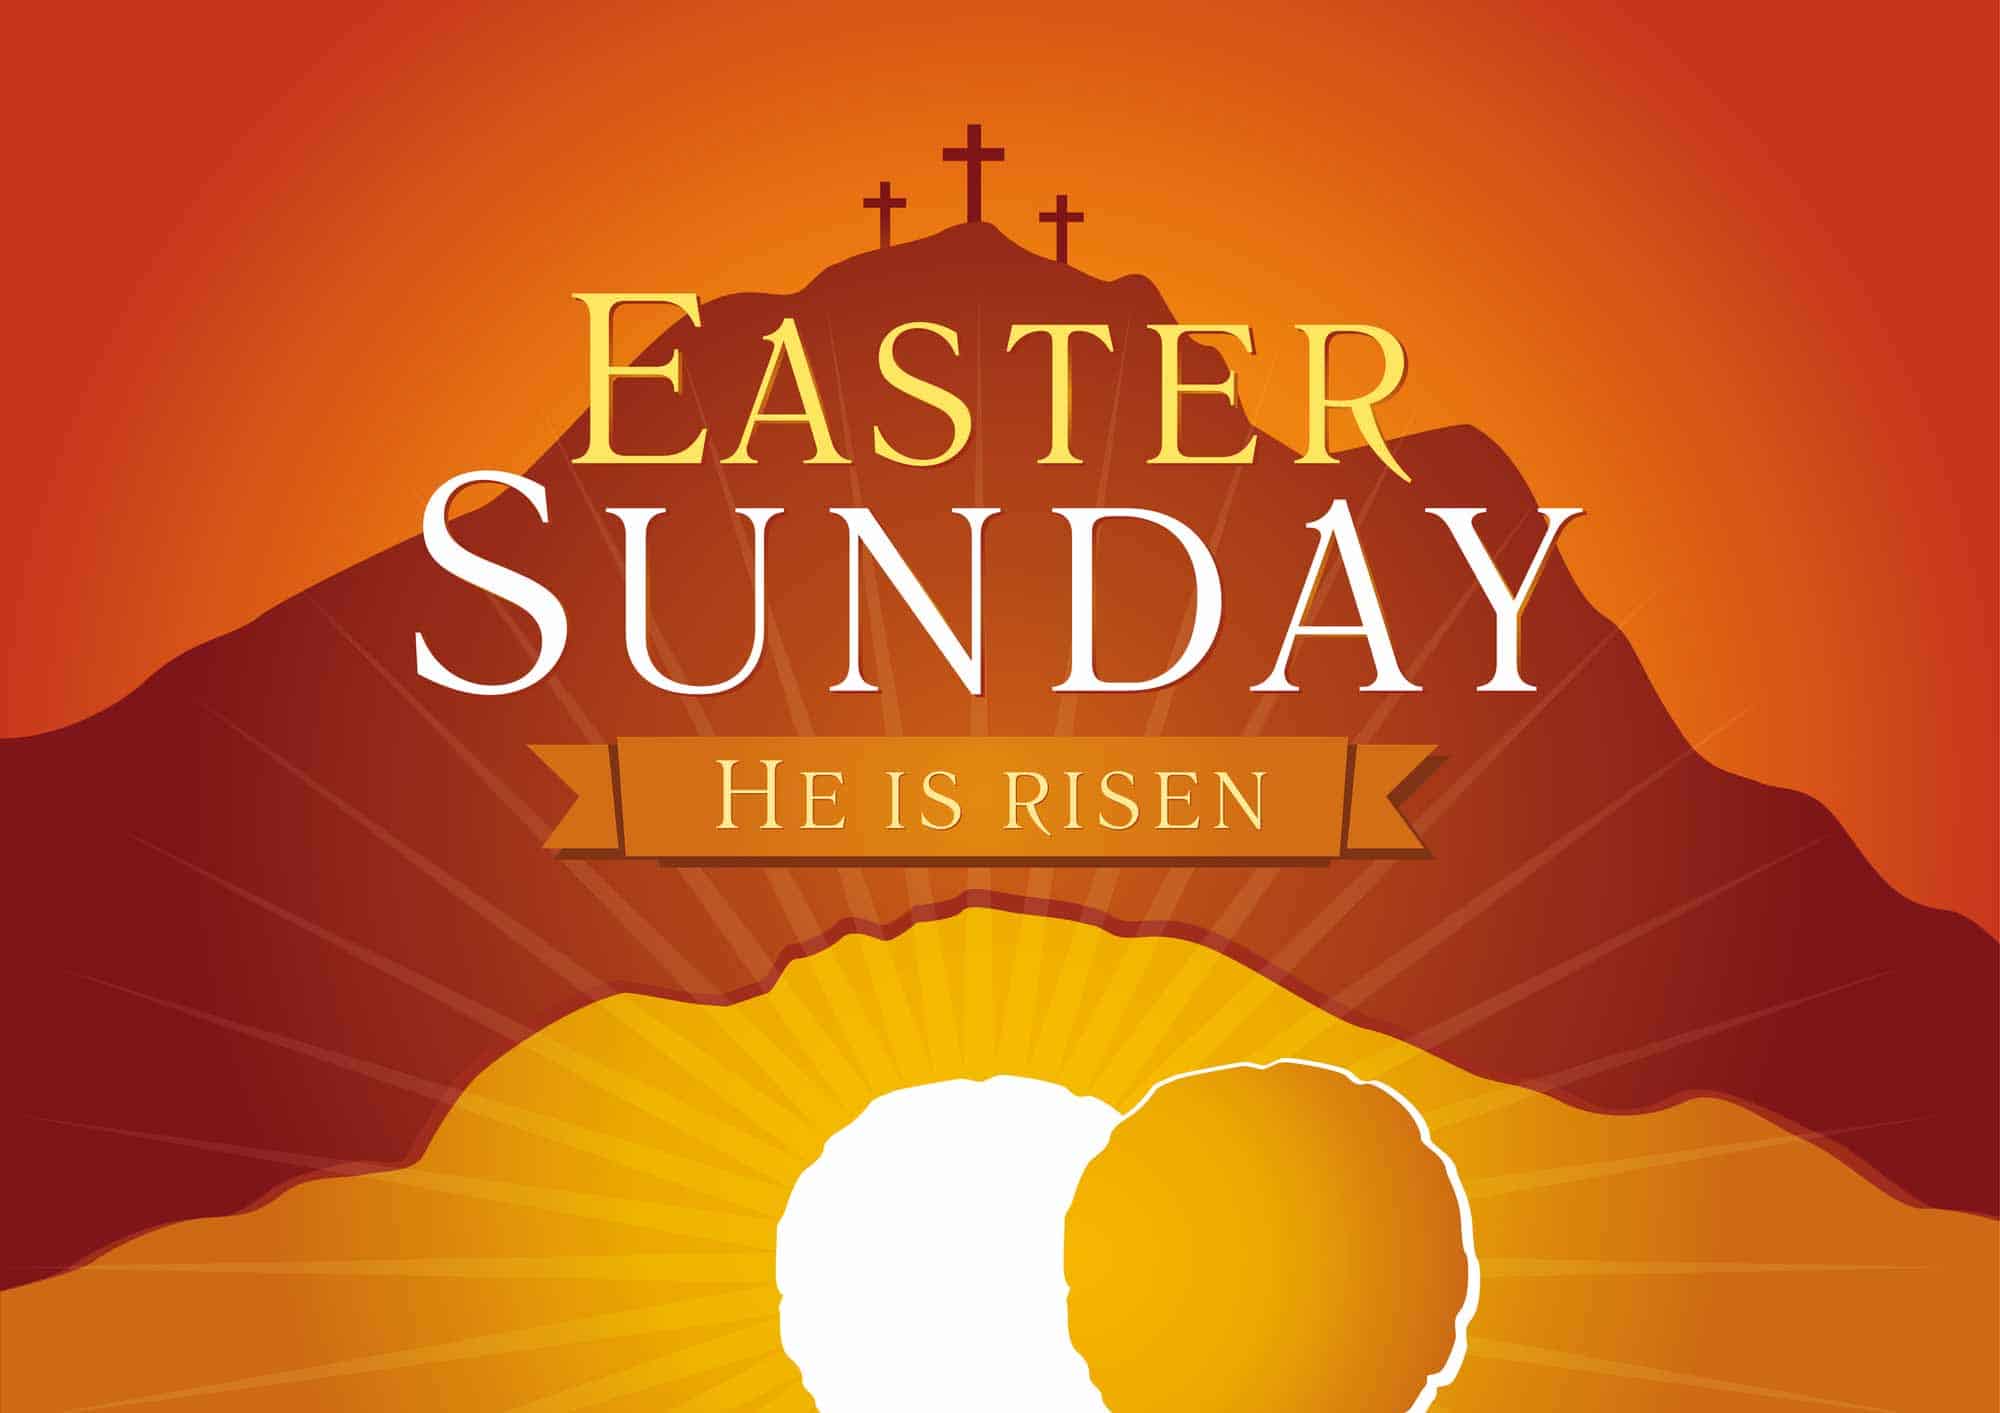 Easter Sunday Images Reflection For Easter Sunday Easter sunday